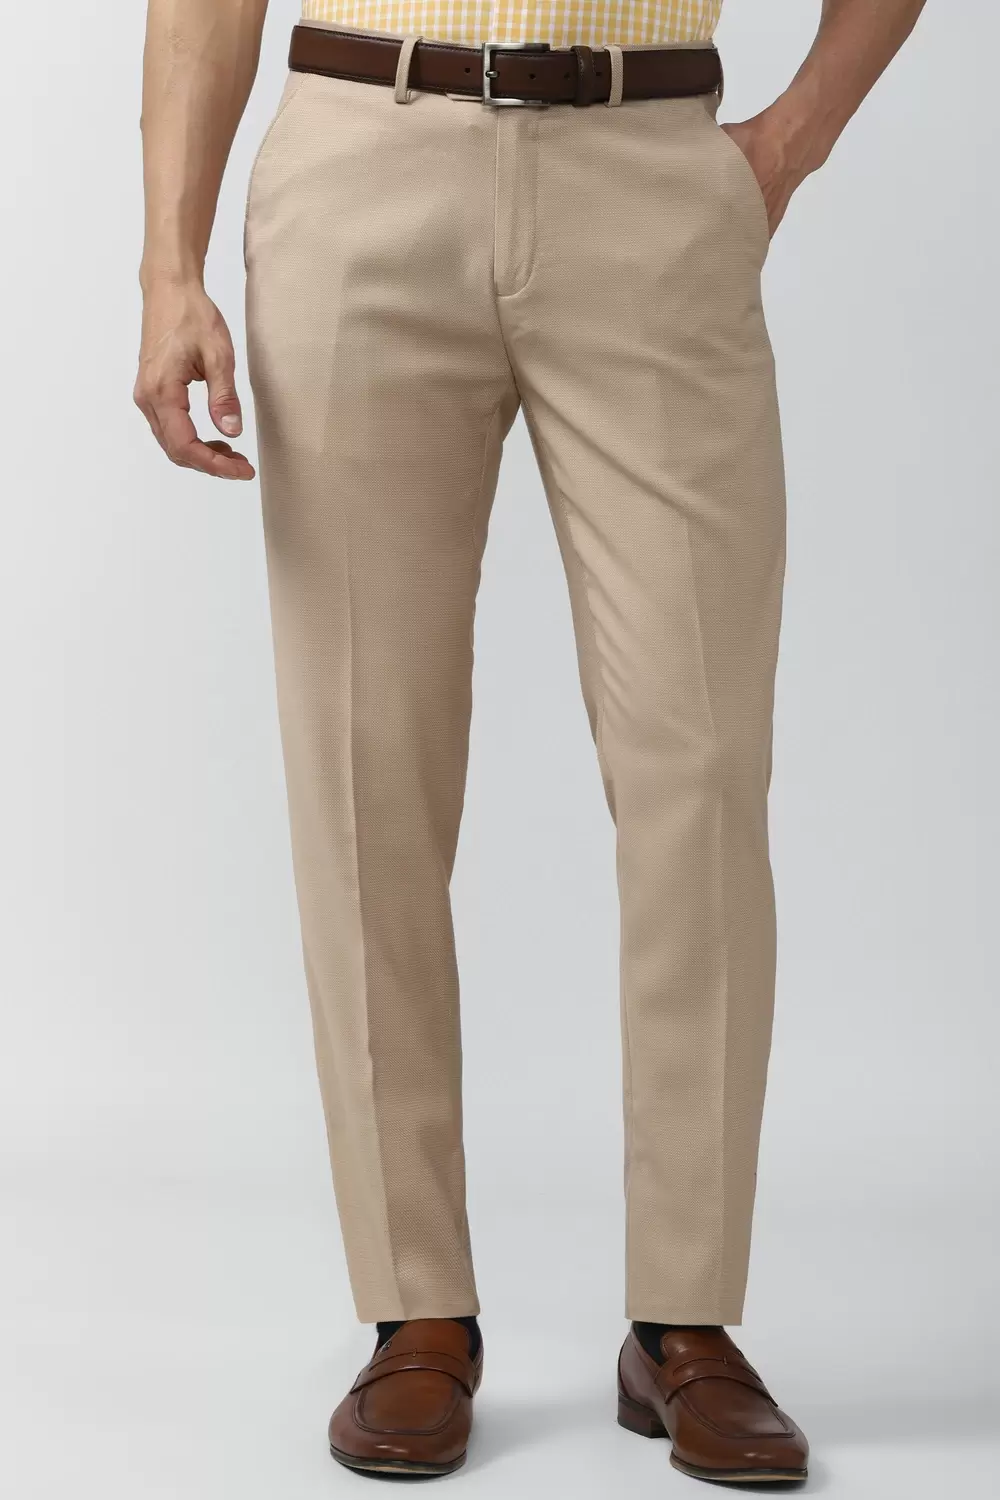 Peter England Men Beige Solid Slim Fit Formal Trousers